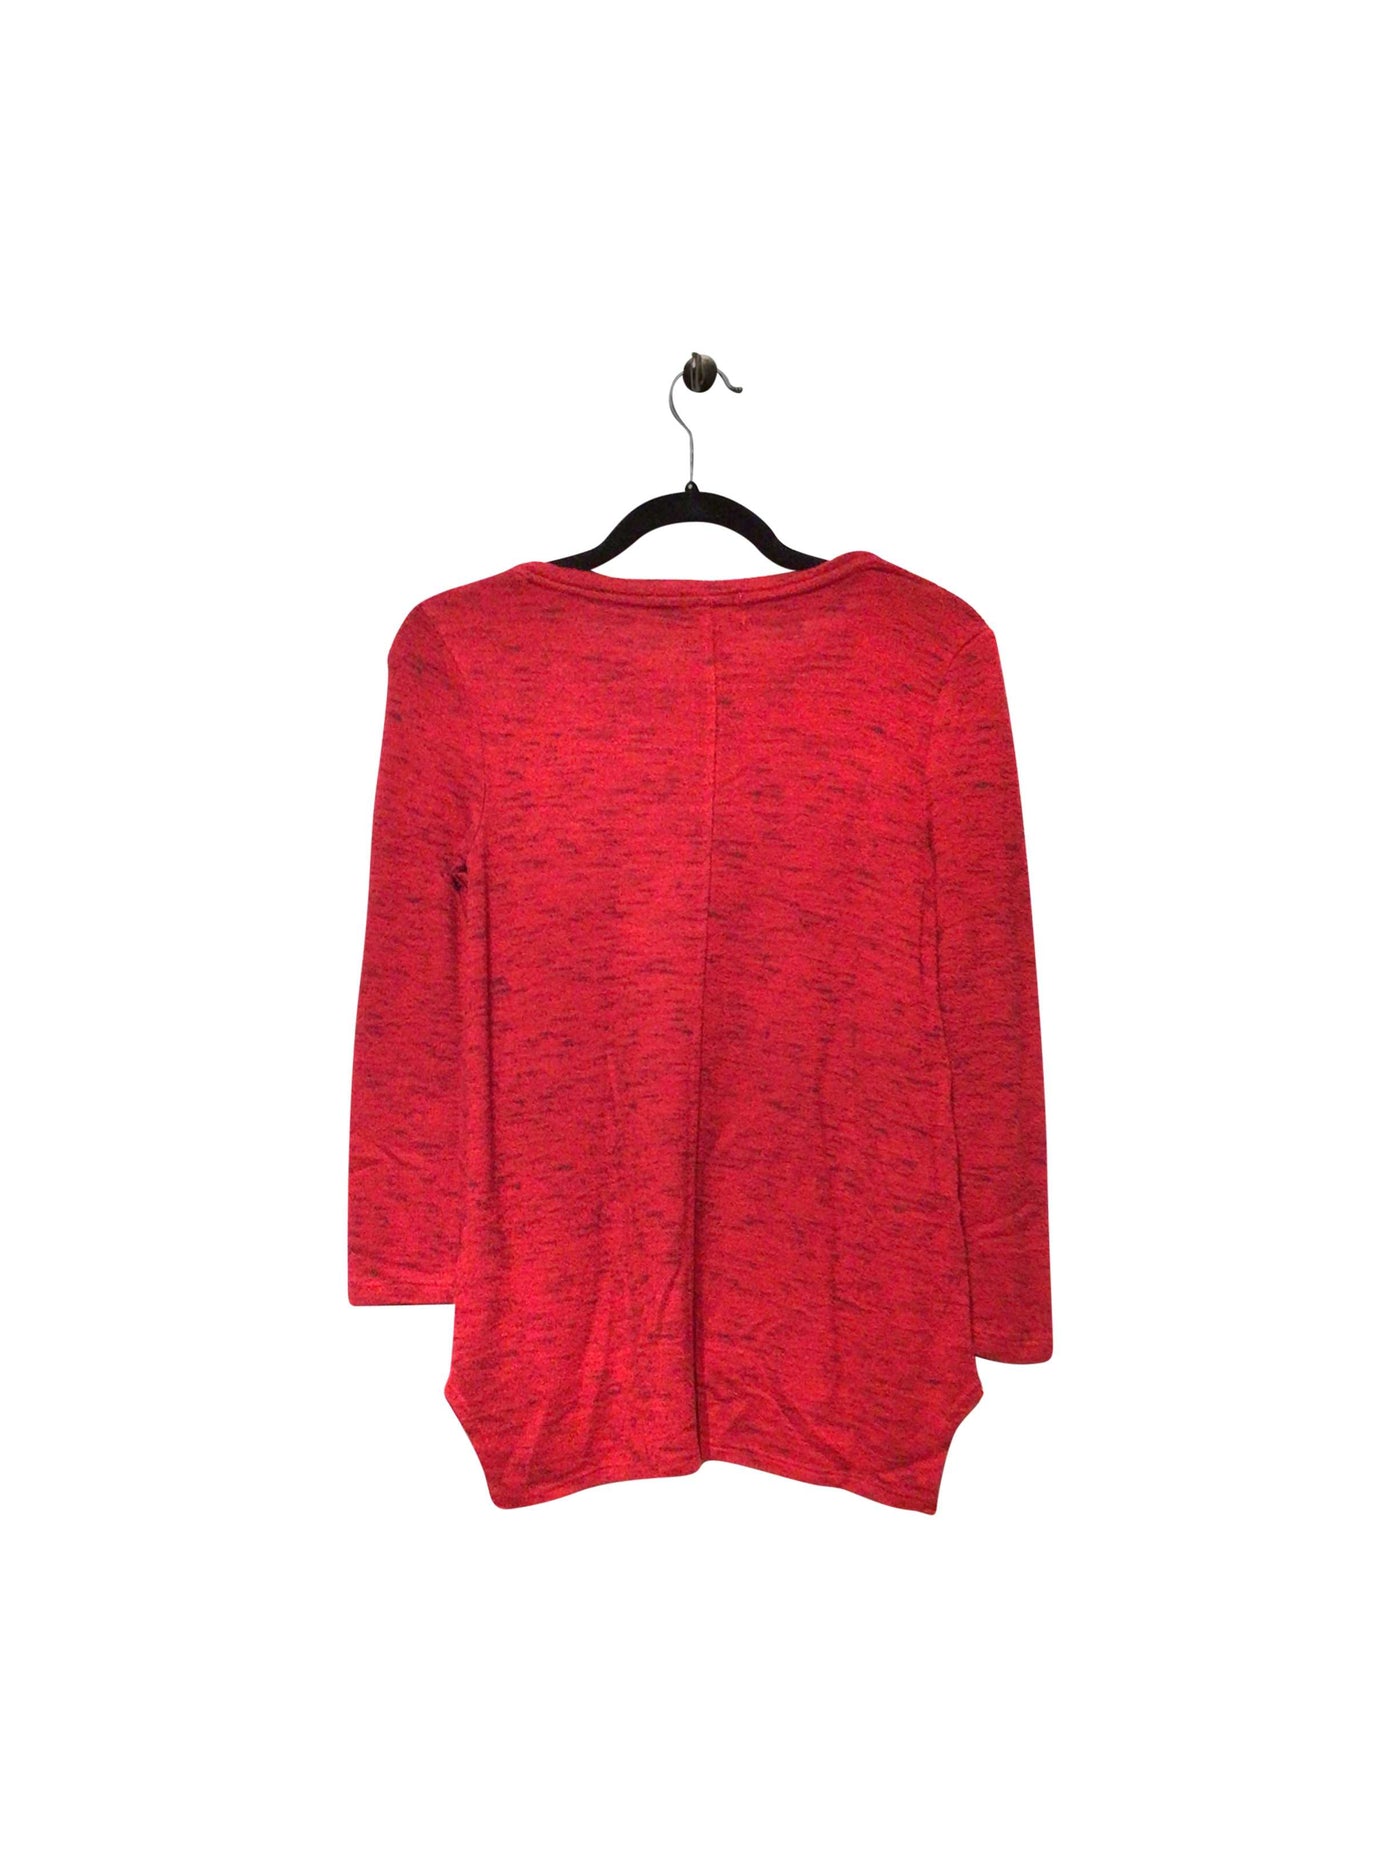 OLD NAVY Regular fit T-shirt in Red  -  M  8.61 Koop